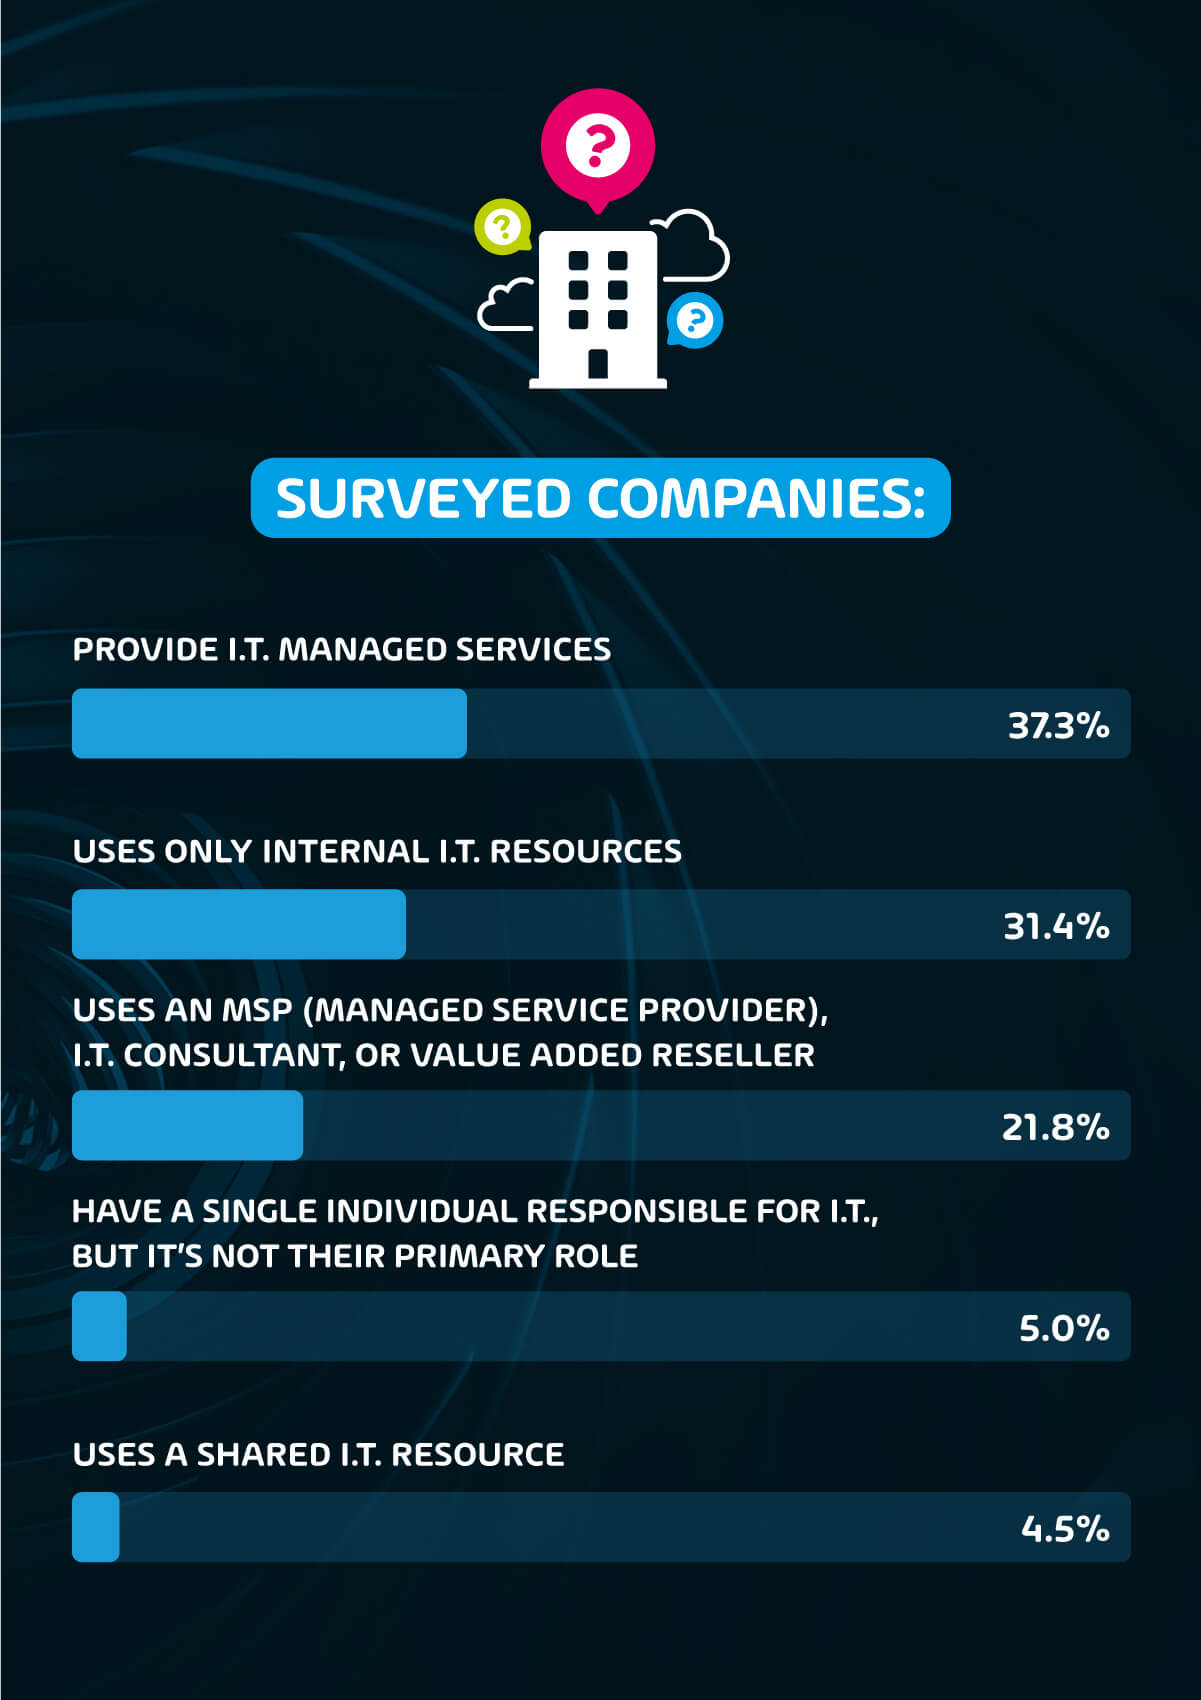 Surveyed Companies